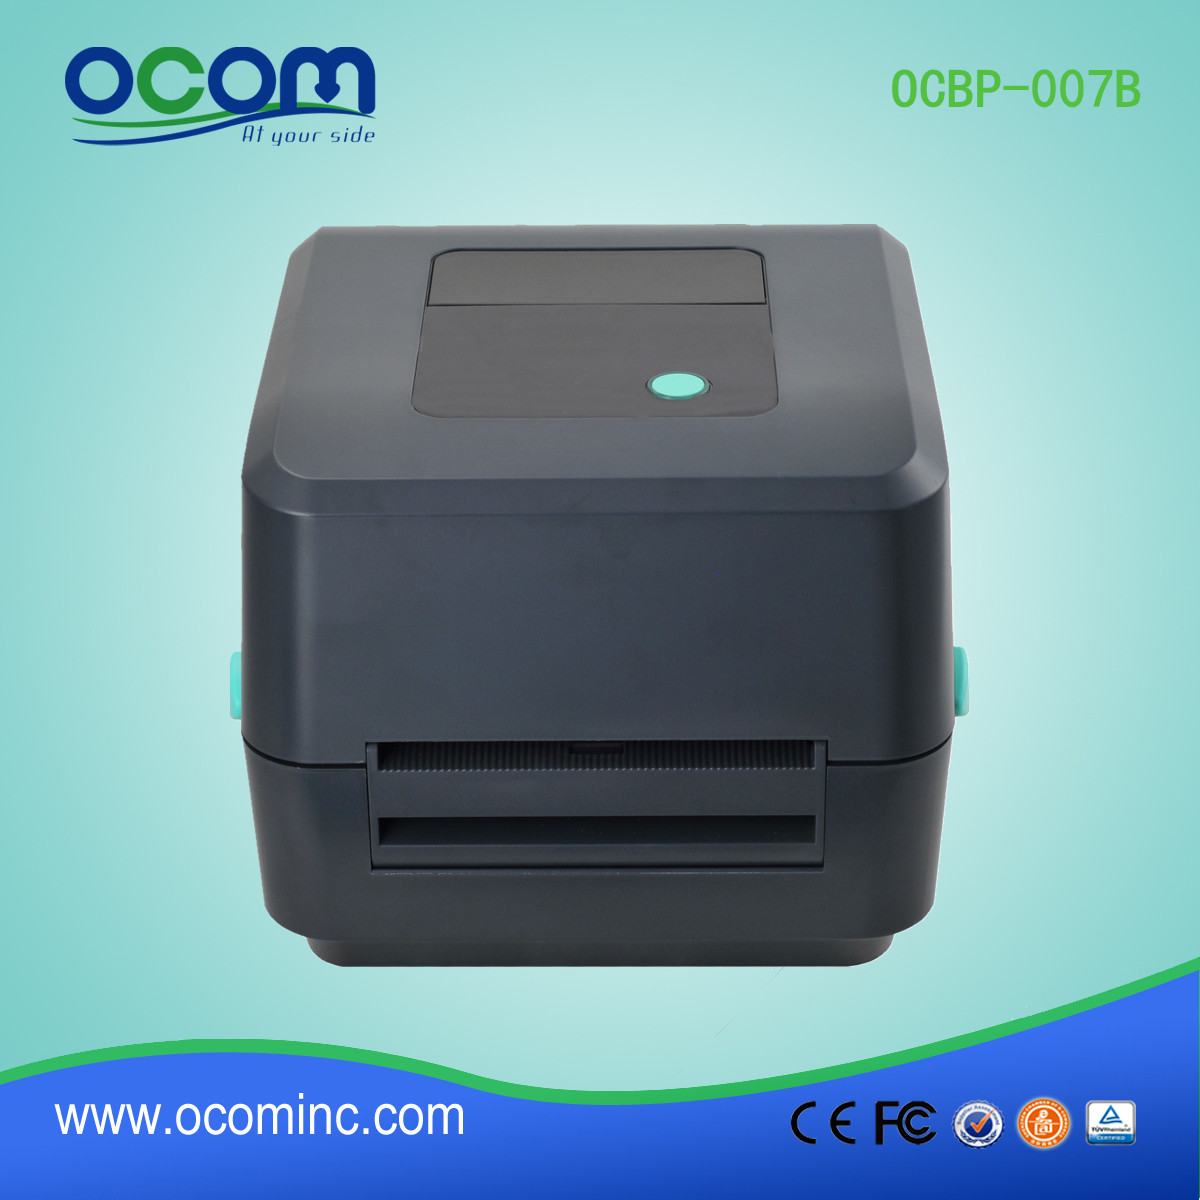 OCBP-007B Black 4 "Direct thermal printer with barcode label